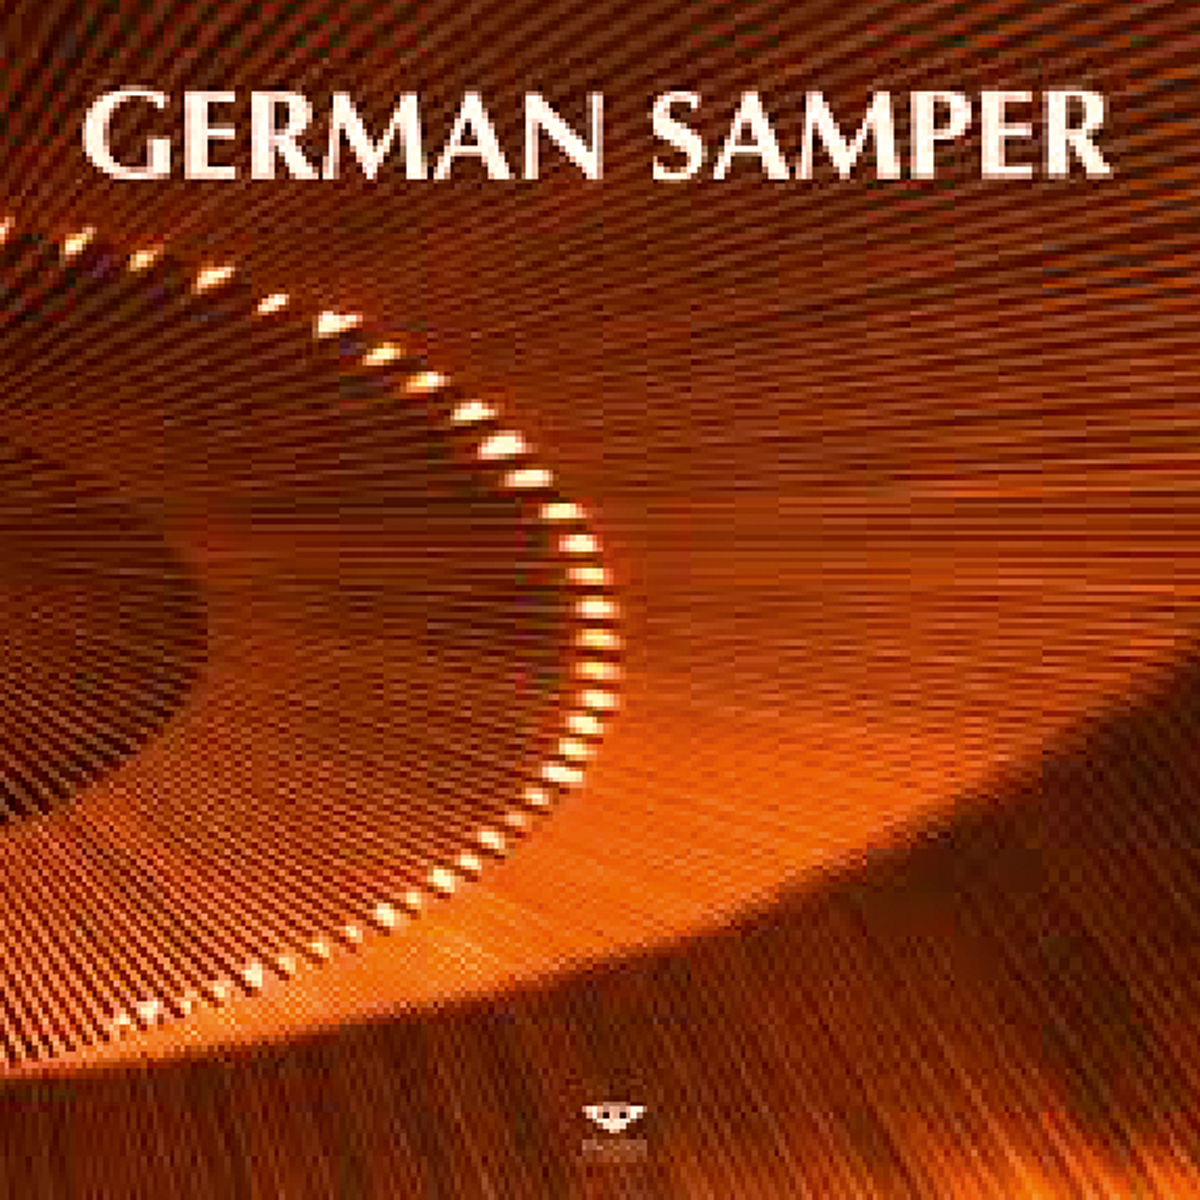 Germán Samper